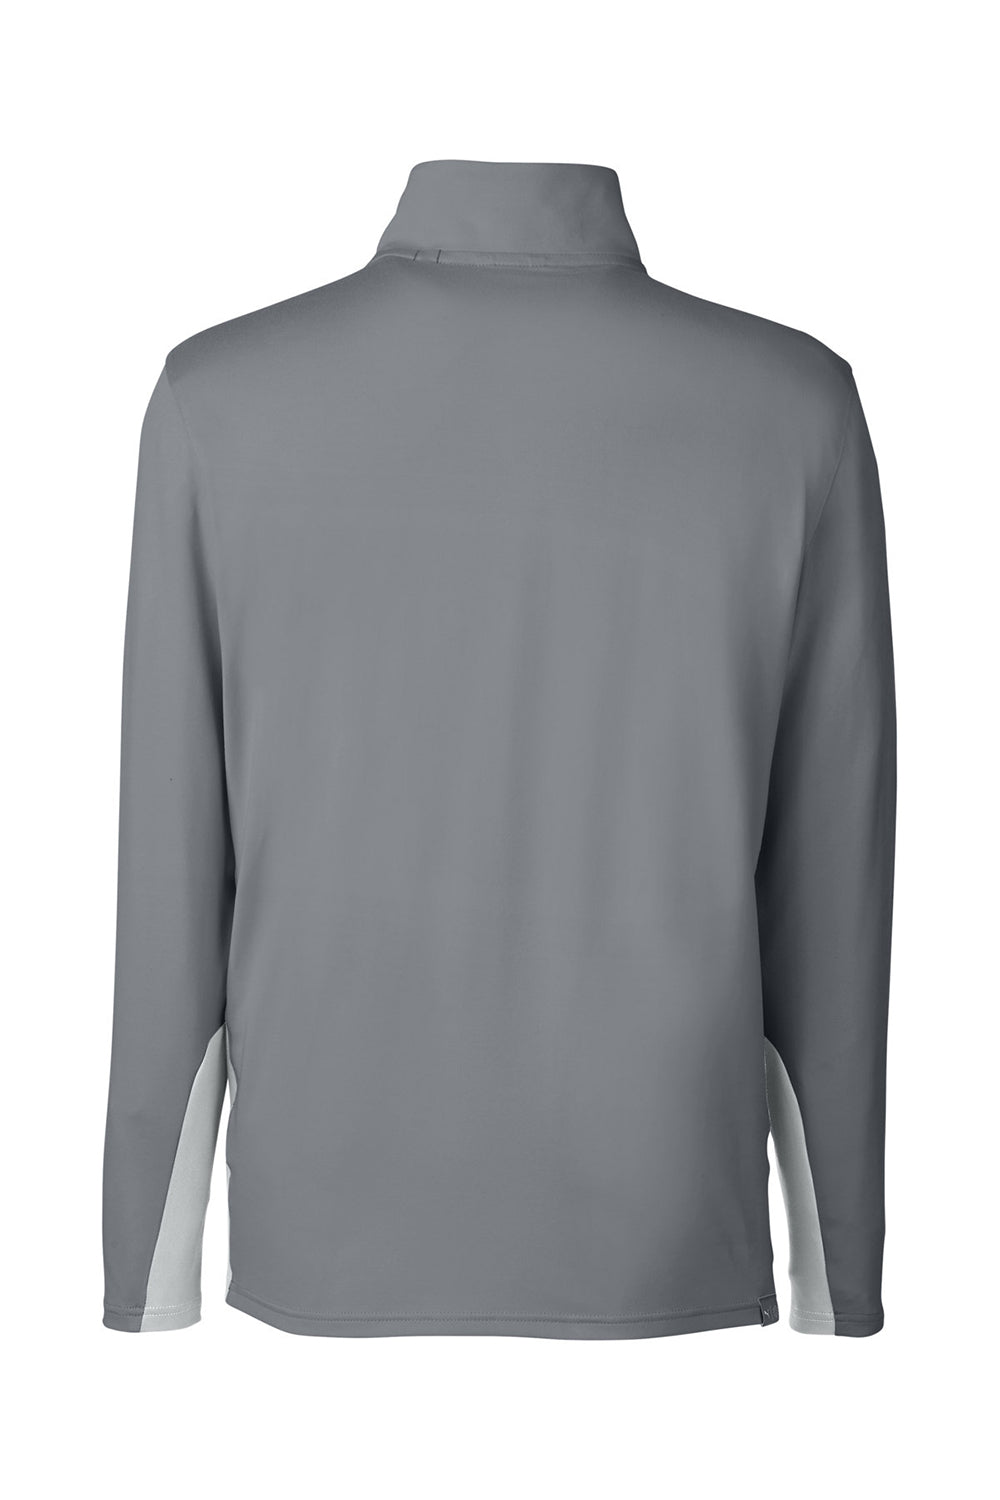 Puma 599127 Mens Gamer 1/4 Zip Sweatshirt Quiet Shade Grey Flat Back